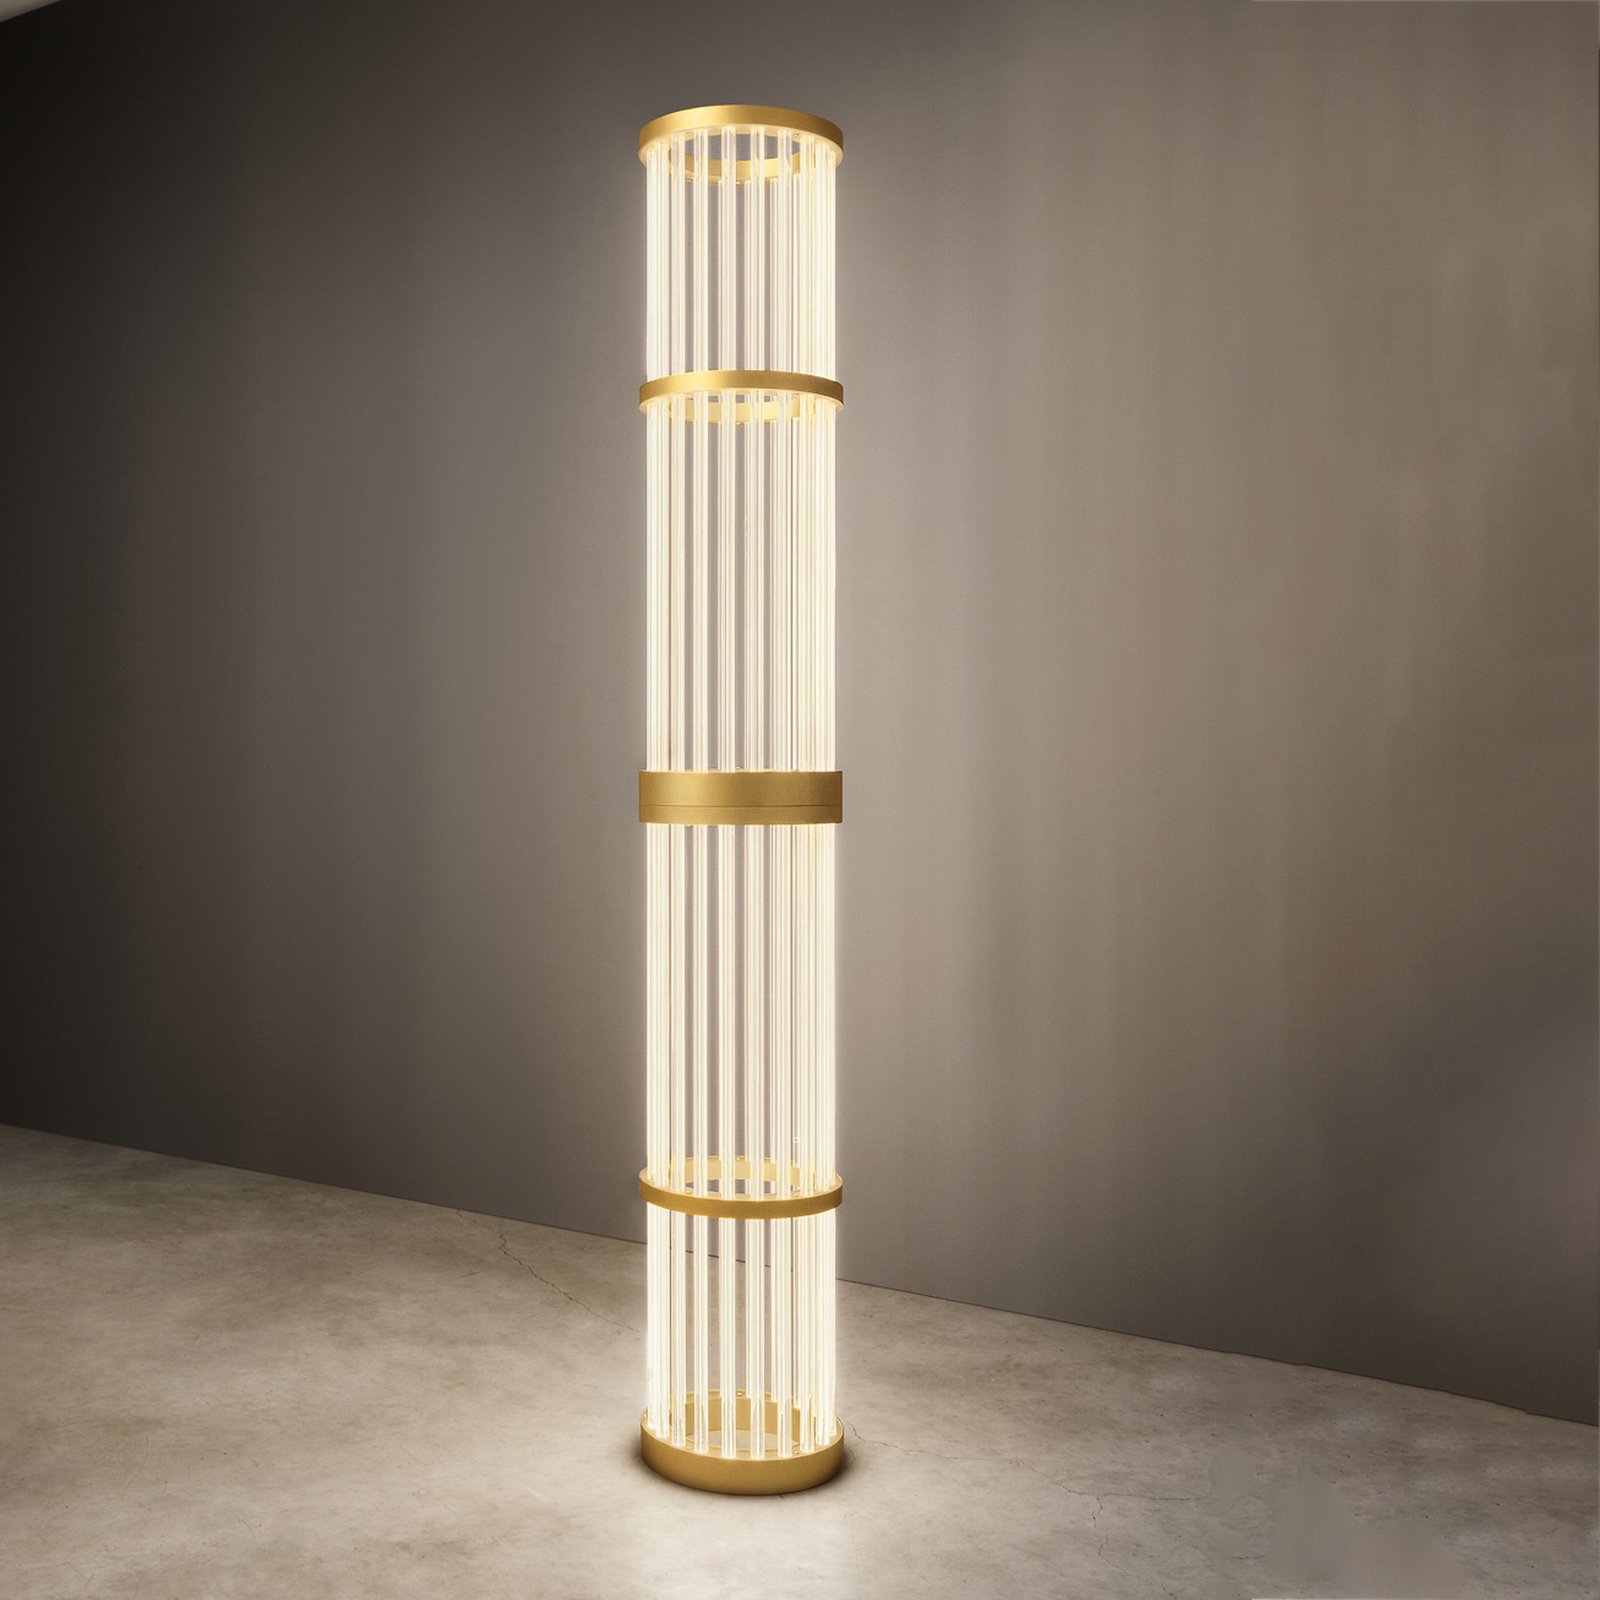 OLEV Thirties designer floor lamp, height 200 cm